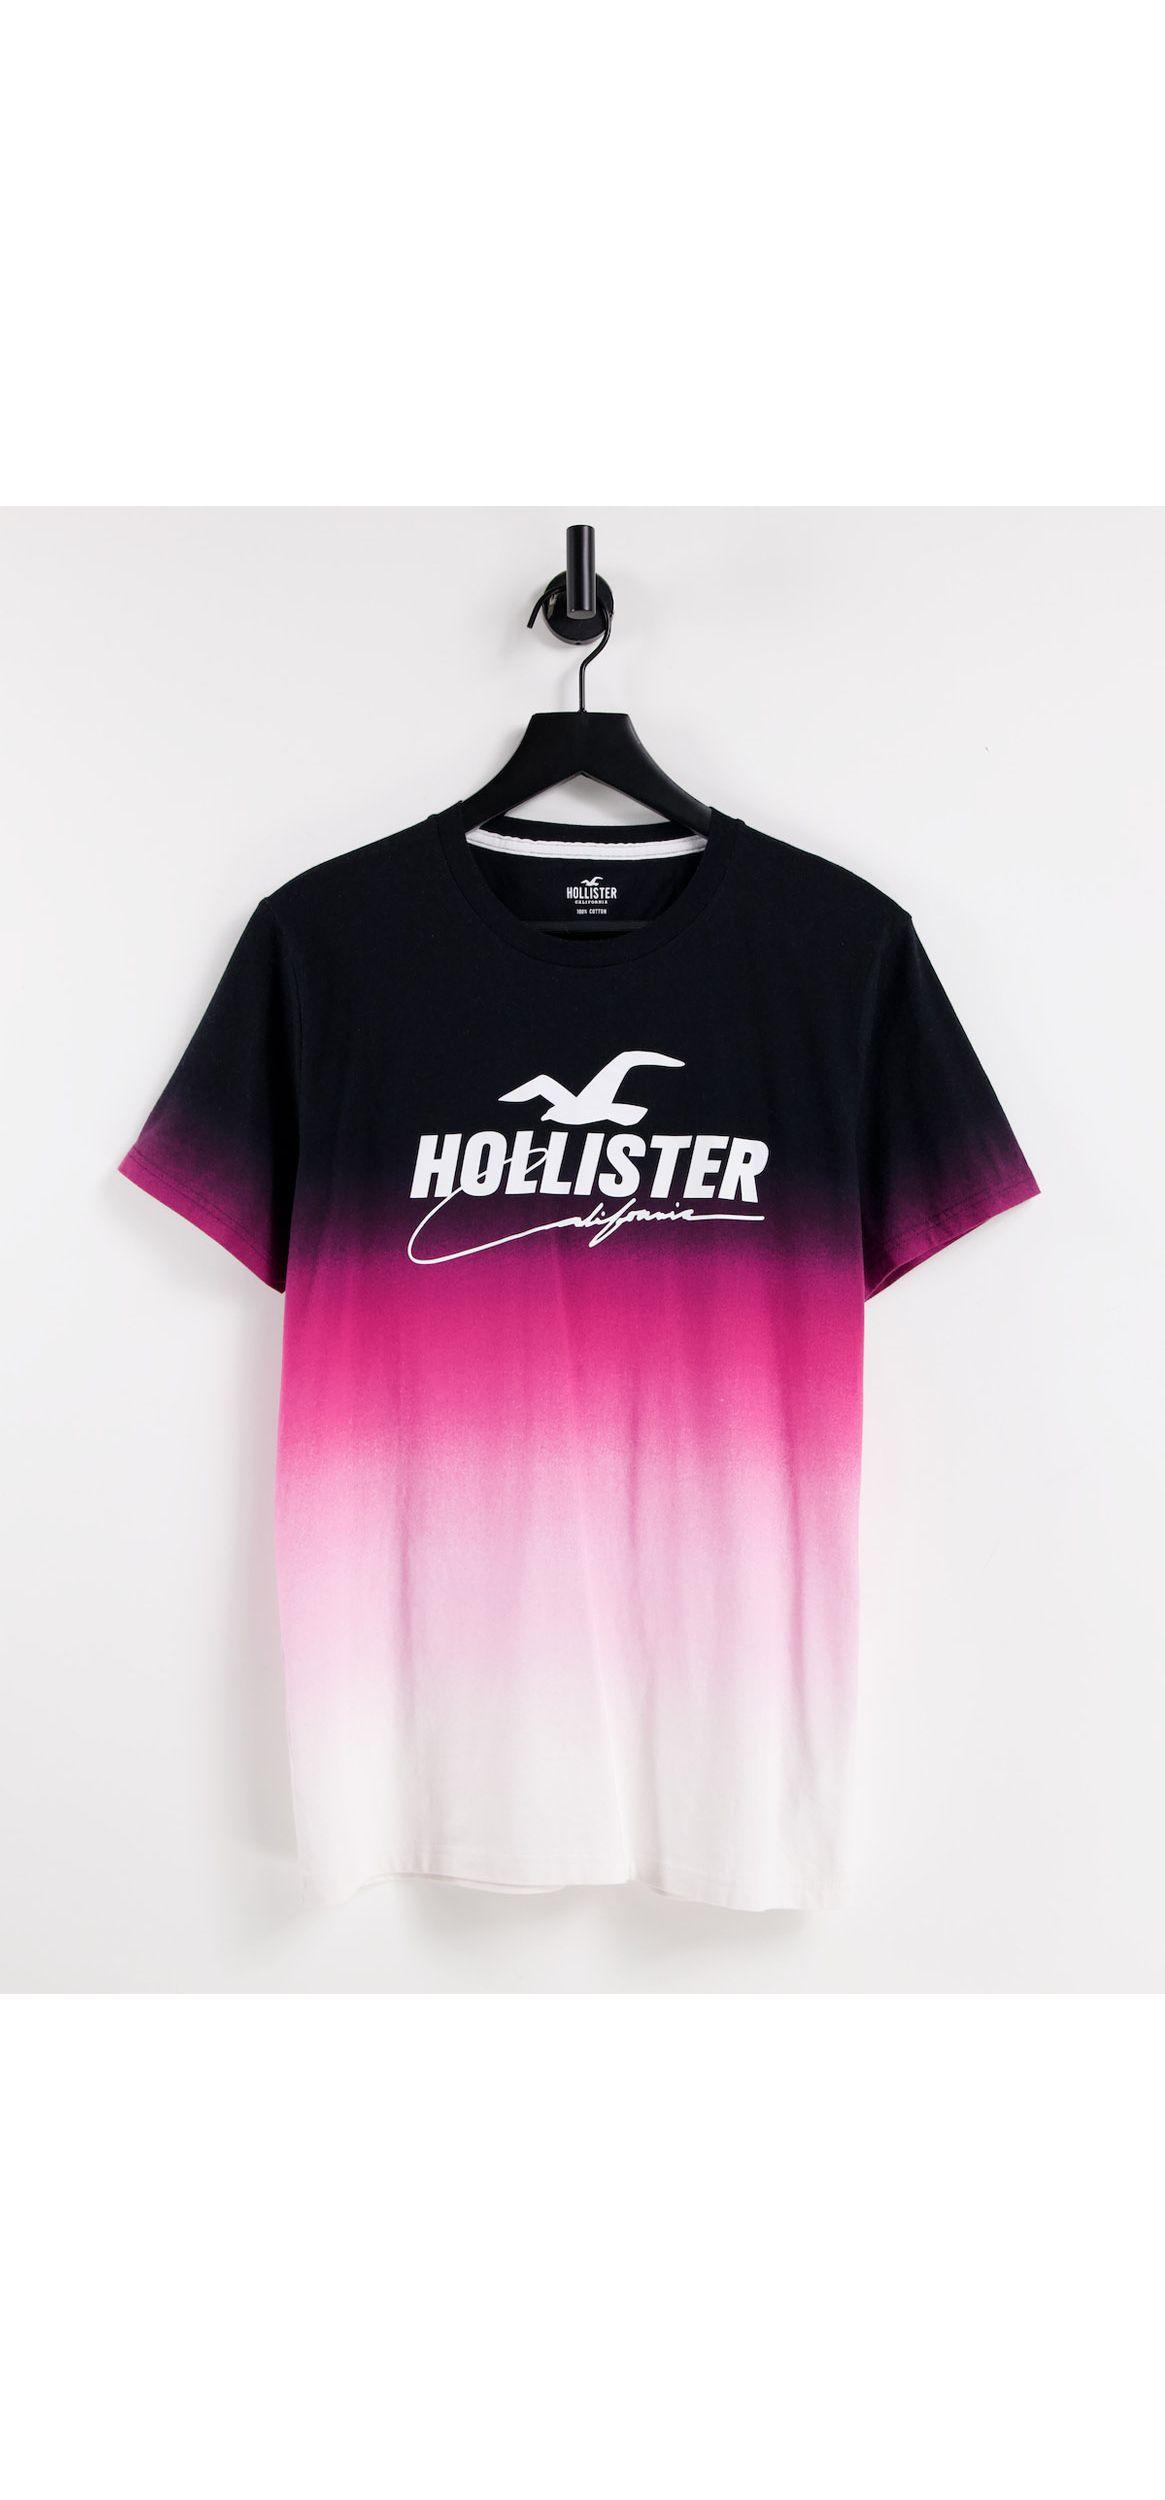 https://cdna.lystit.com/photos/asos/fb30c8b1/hollister-Pink-Front-Logo-Ombre-Print-T-shirt.jpeg